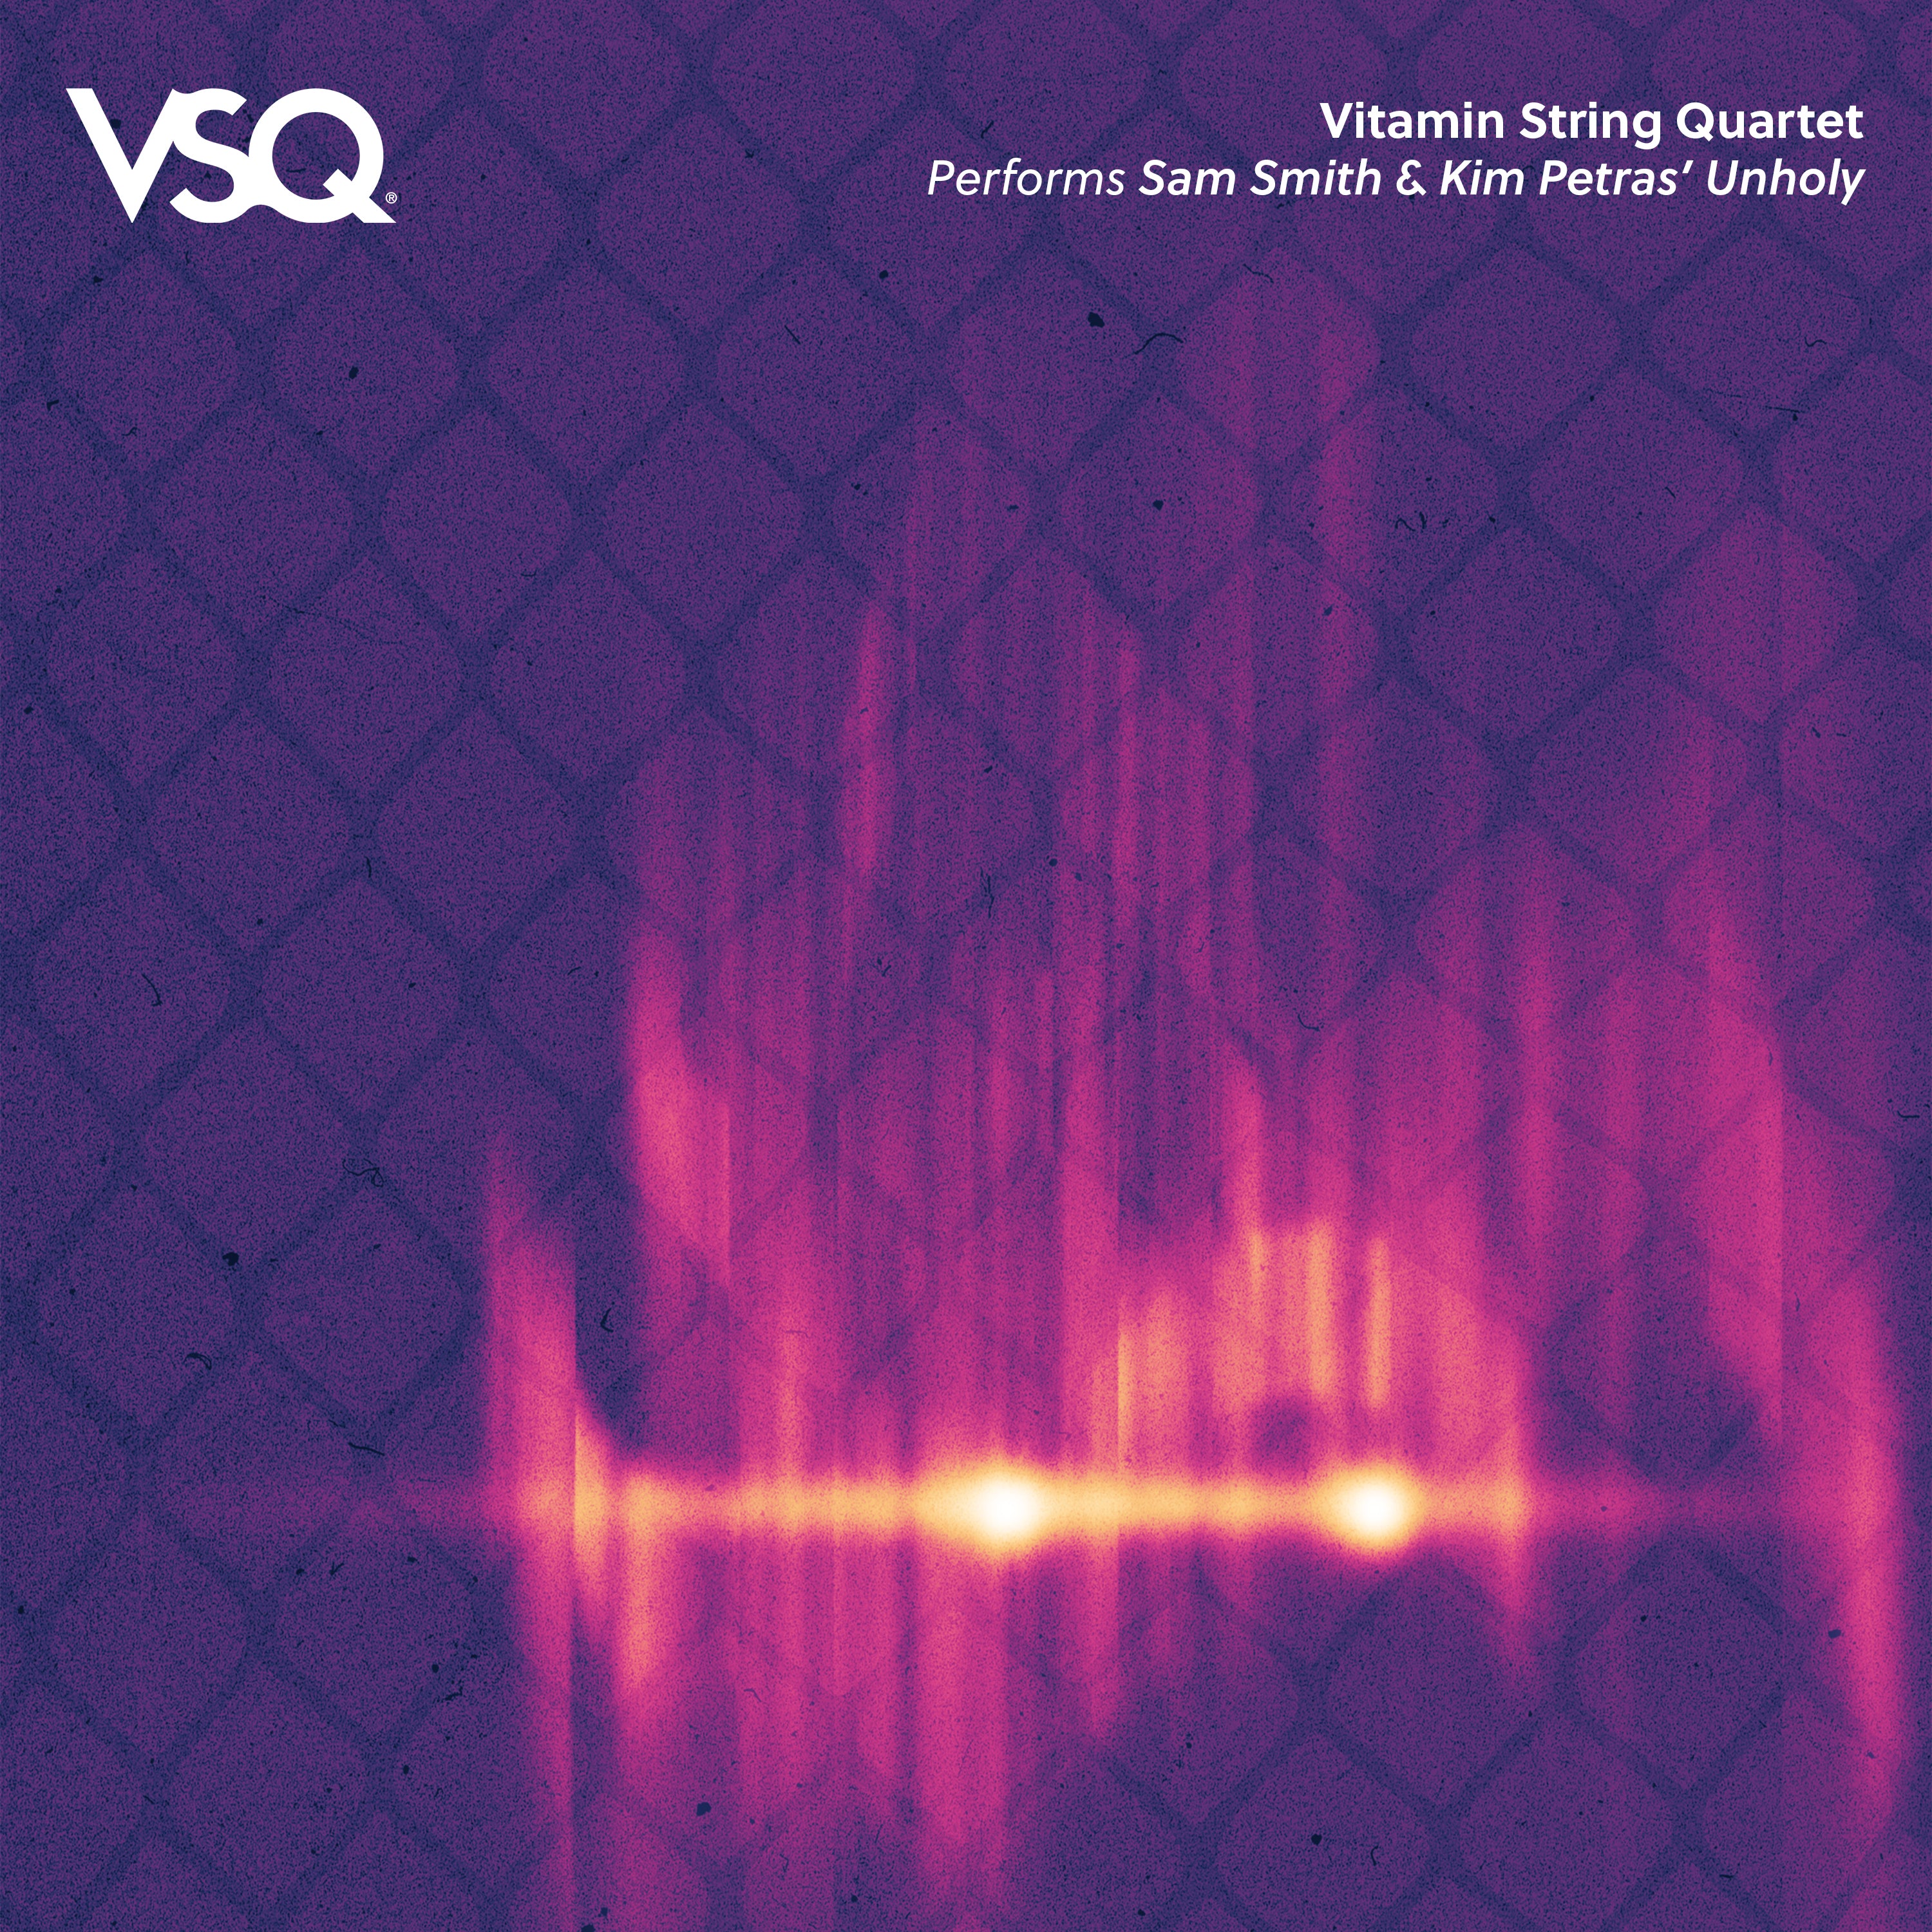 sam smith and kim petras unholy instrumental cover by vitamin string quartet